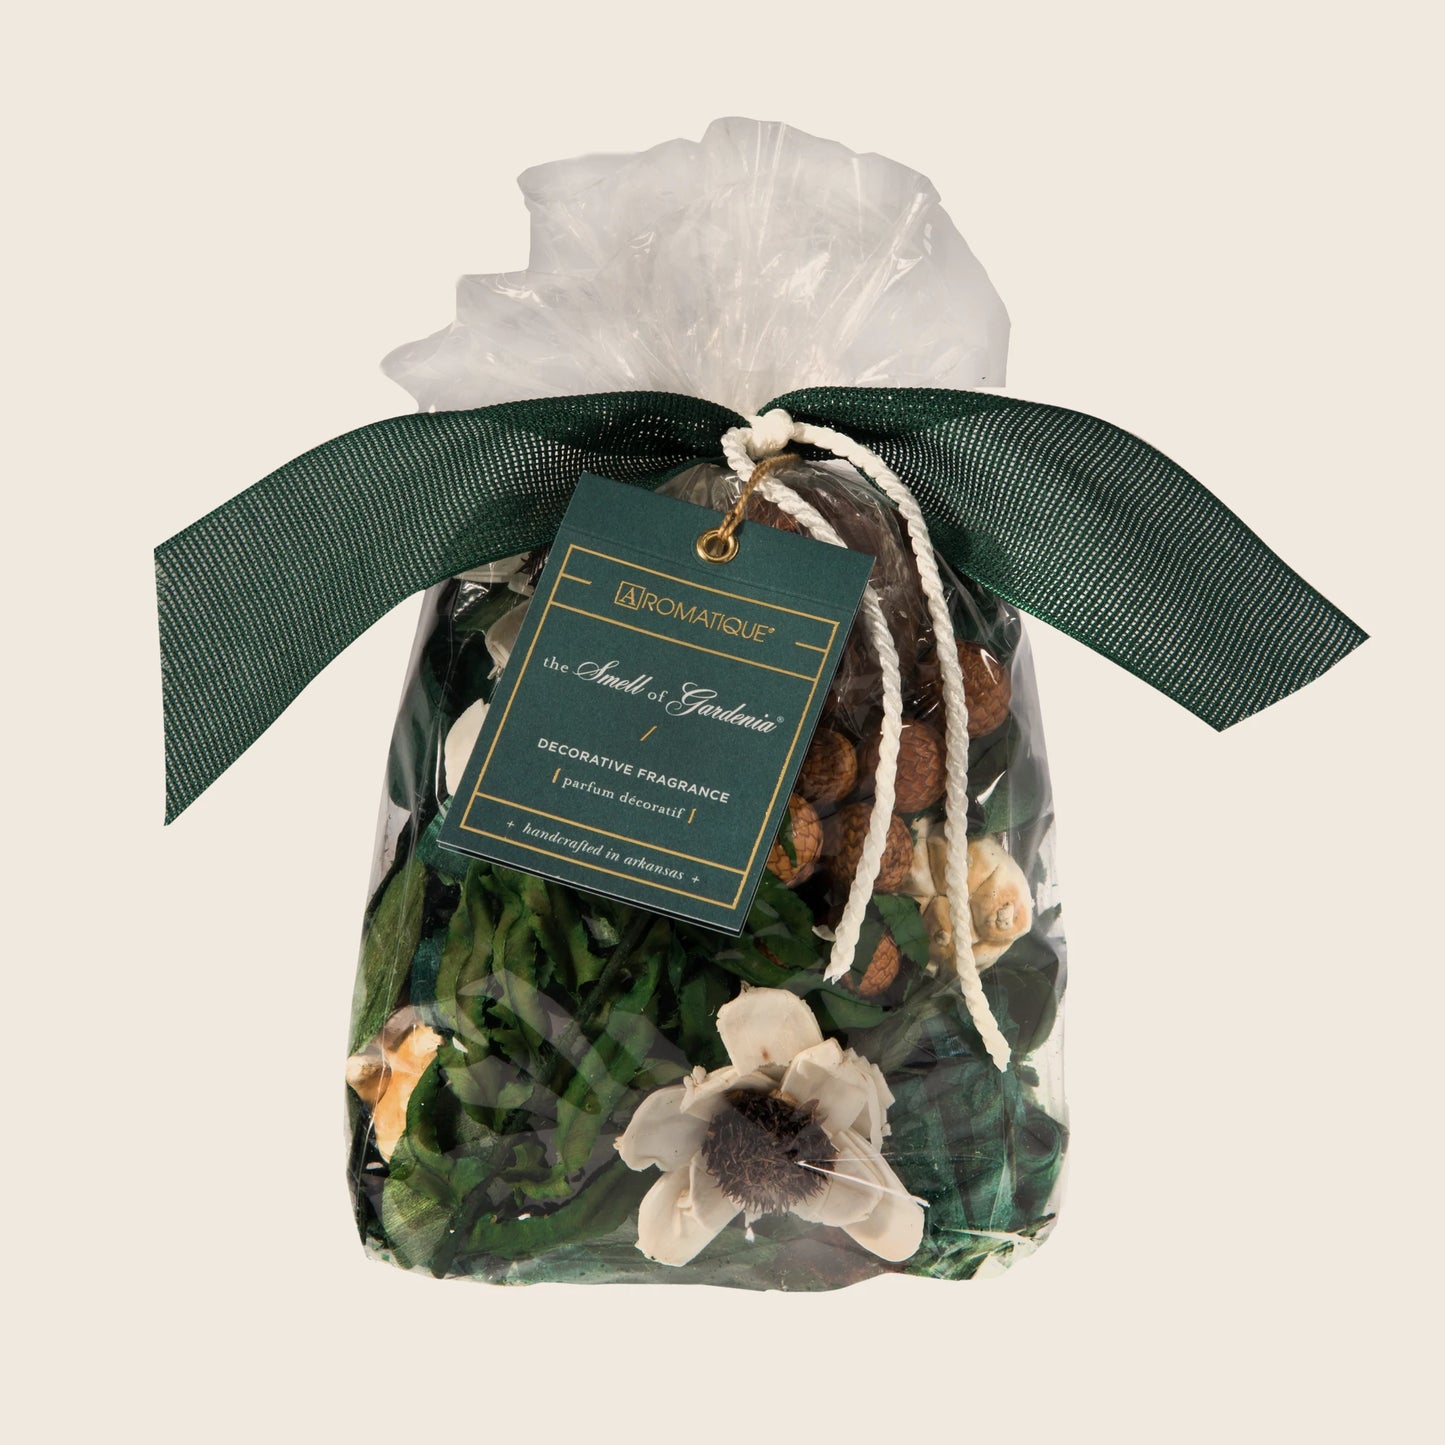 The Smell of Gardenia Decorative Fragrance